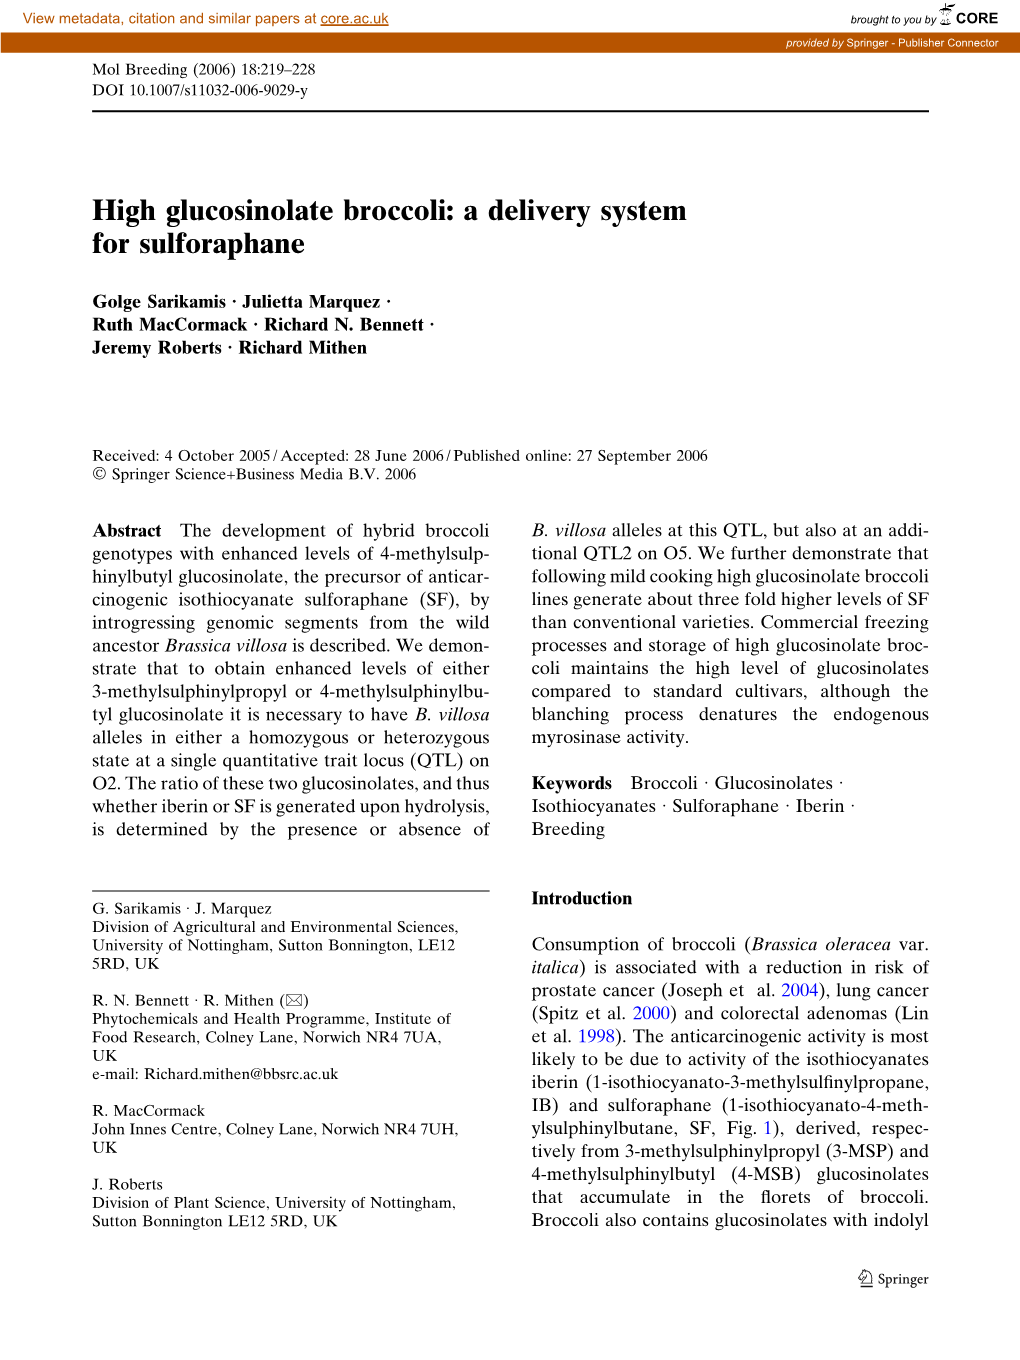 High Glucosinolate Broccoli: a Delivery System for Sulforaphane